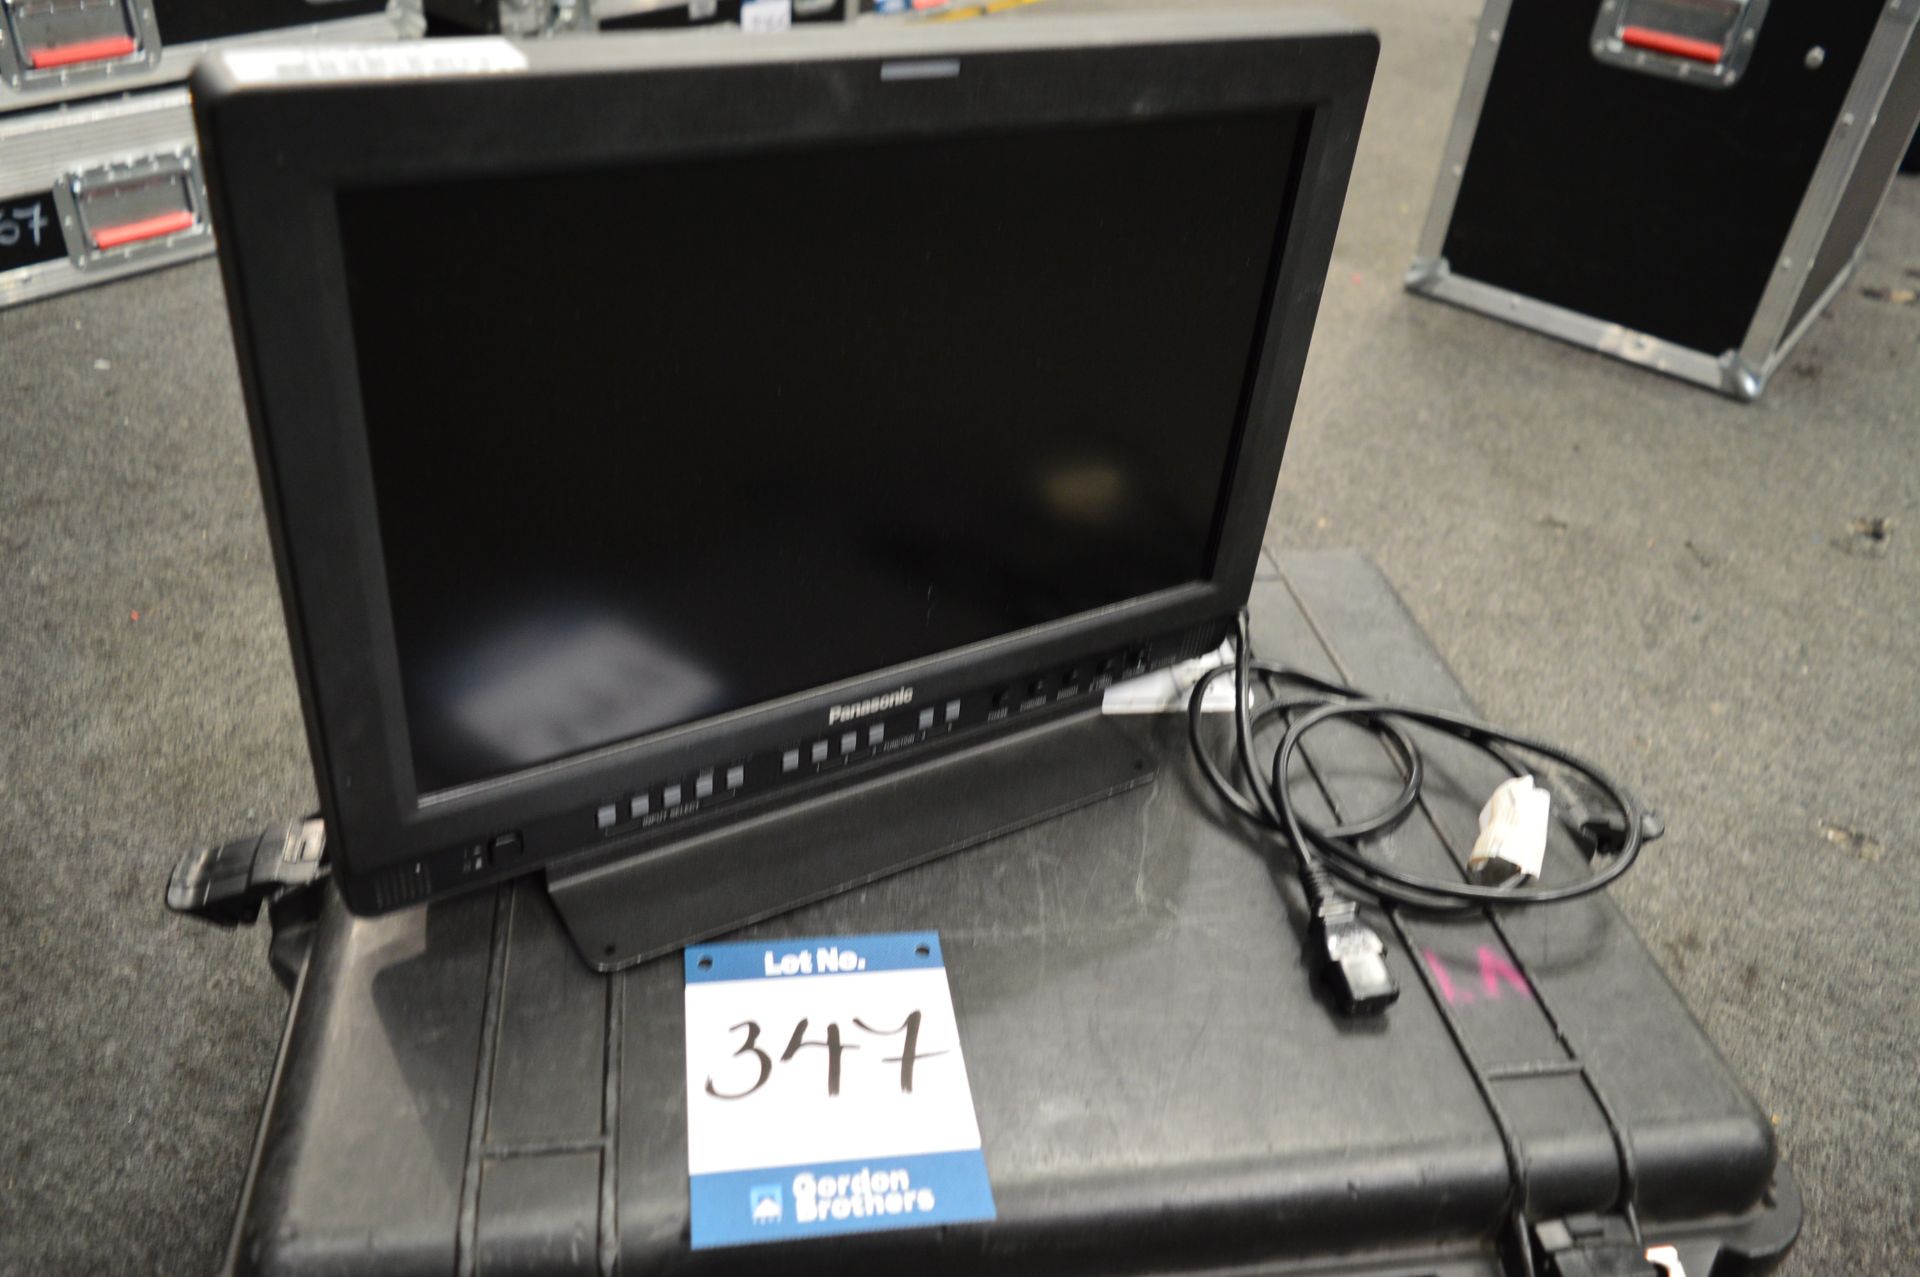 Panasonic, BT-LH1710E 17" LCD monitor, Serial No.